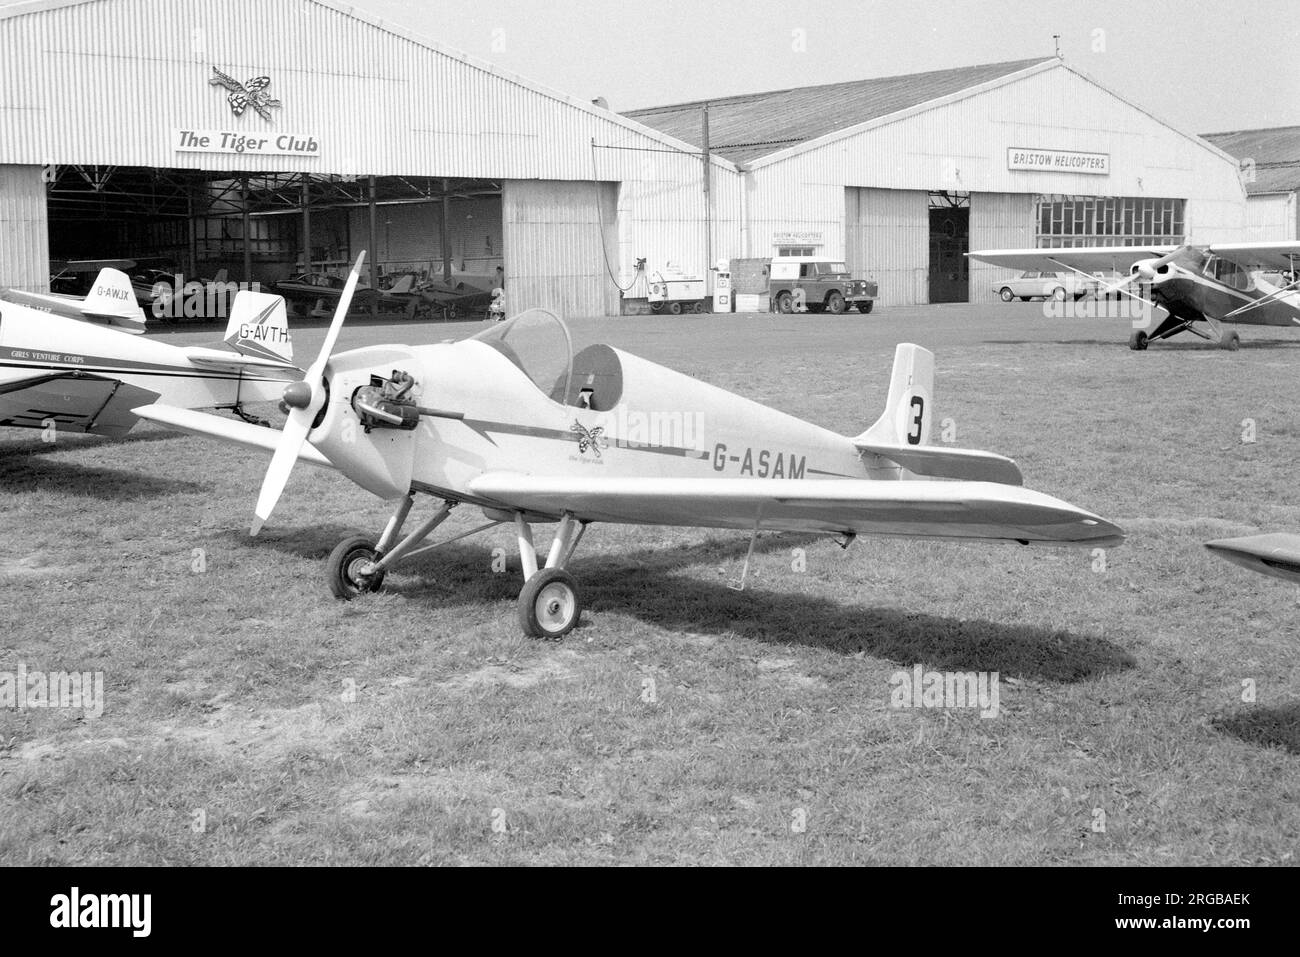 Druine D.31 Turbulent G-ASAM (msn PFA 595), at Redhill Aerodrome, outside the Tiger Club hangar in May 1969. Stock Photo